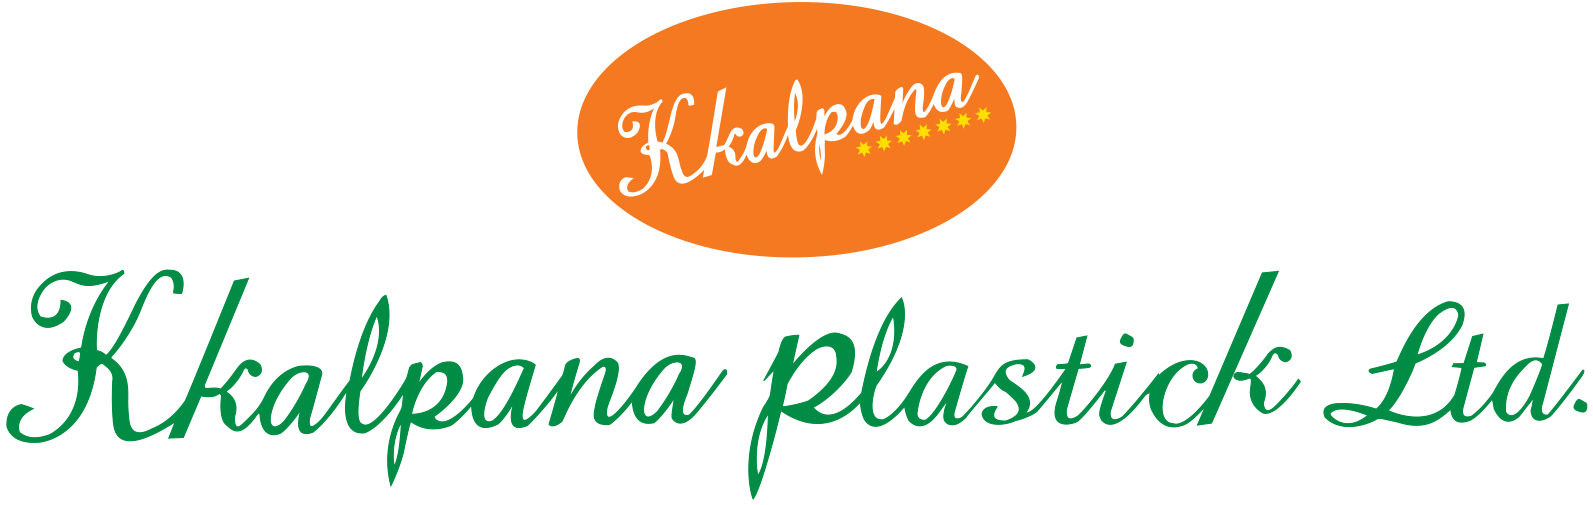 kkalpanaplastick.com